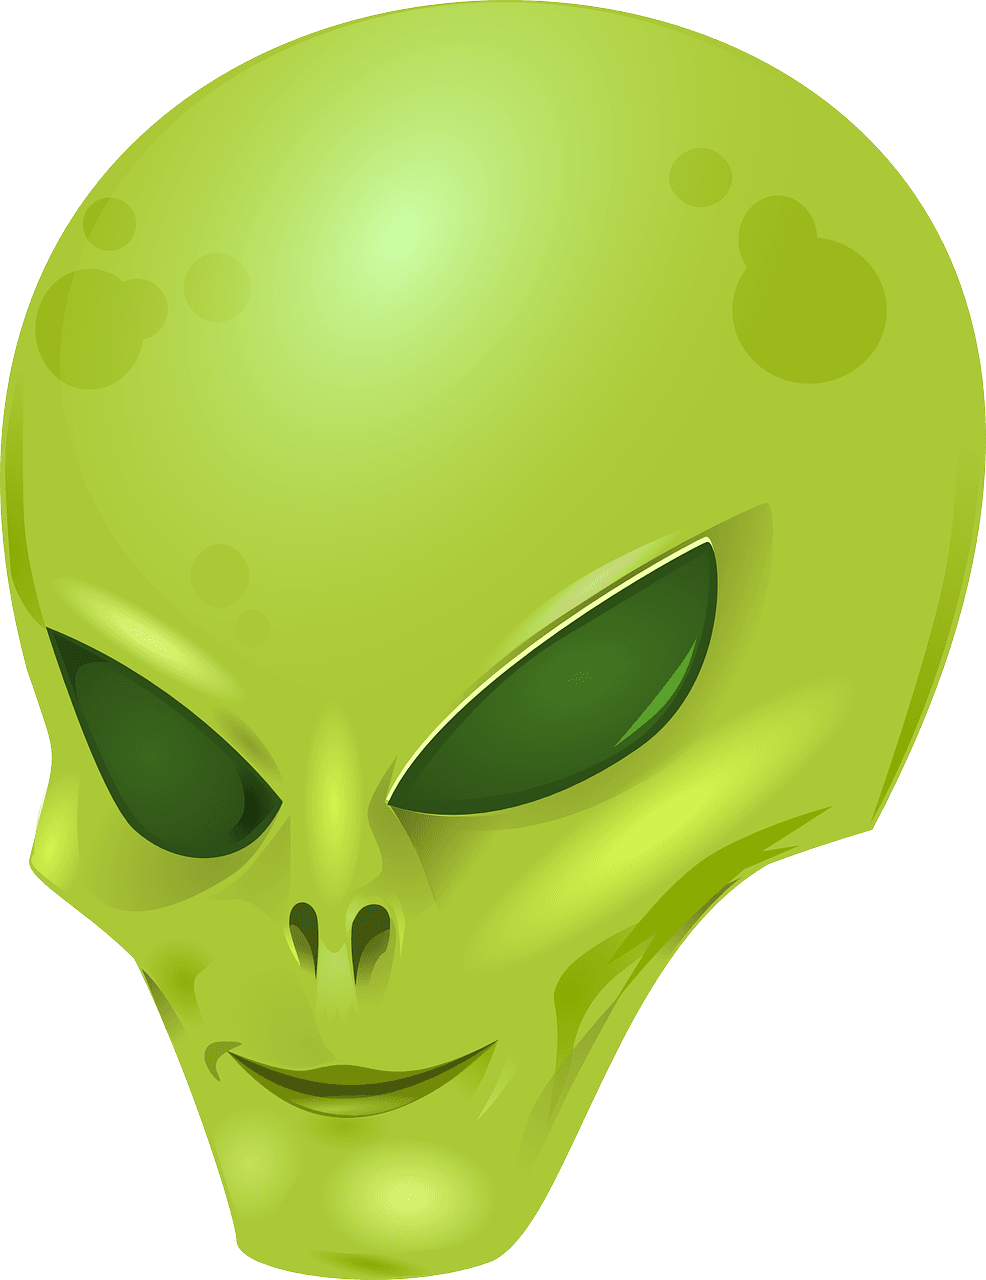 bitcoin finding aliens